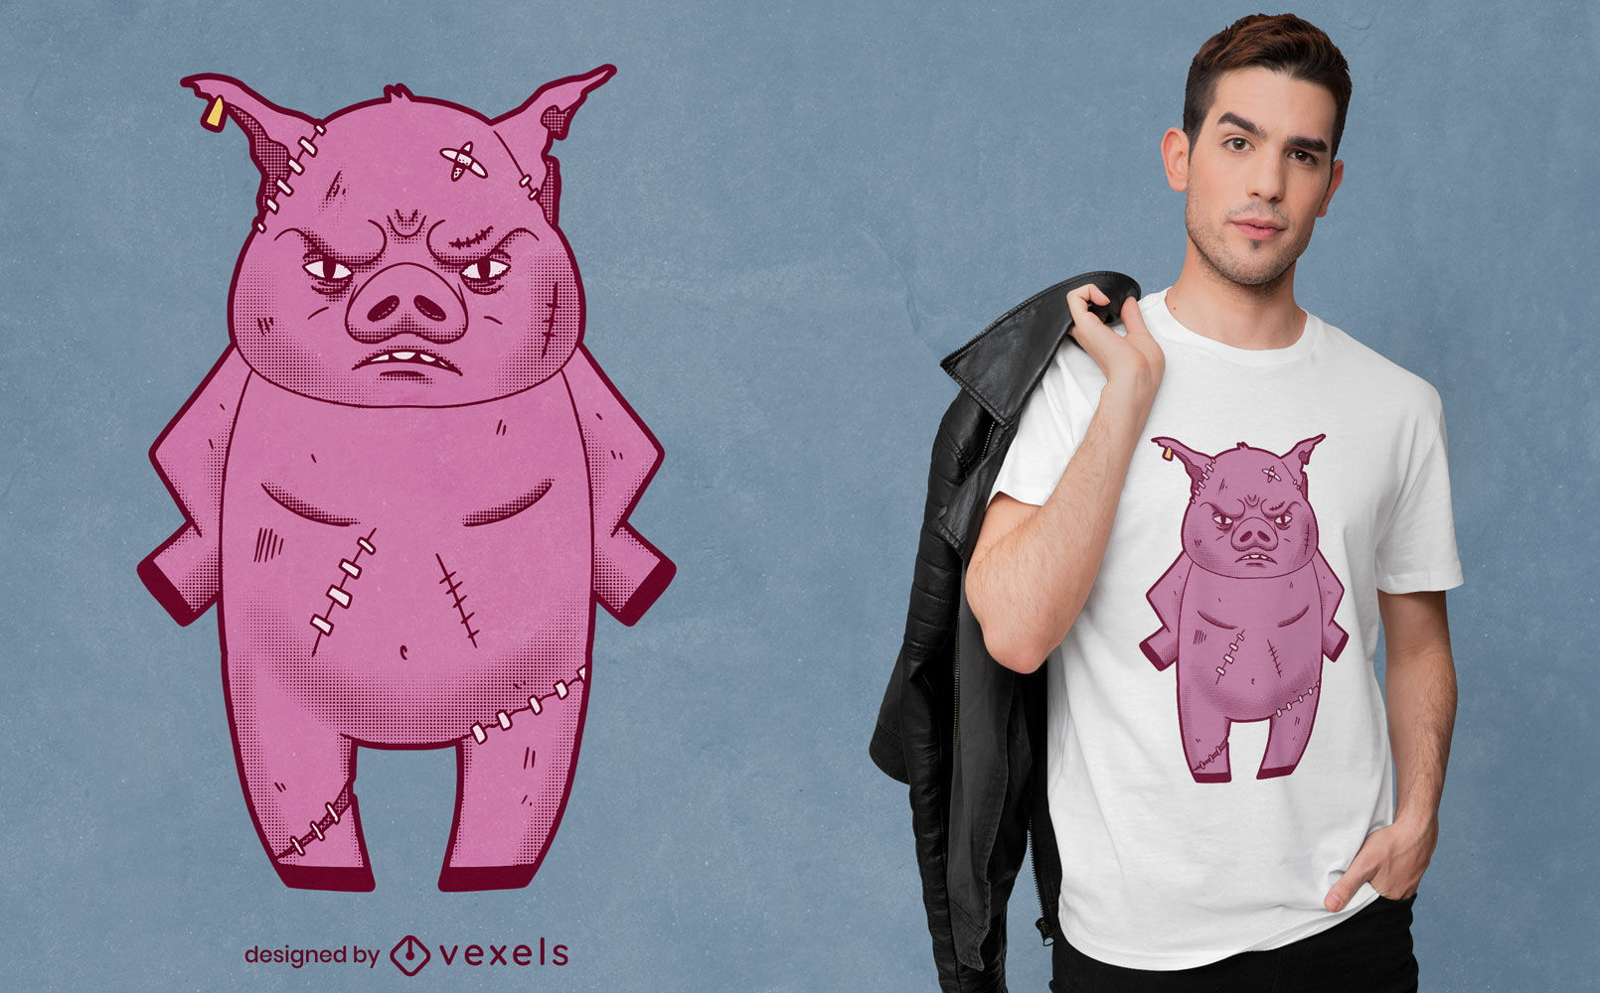 Angry injured pig t-shirt design